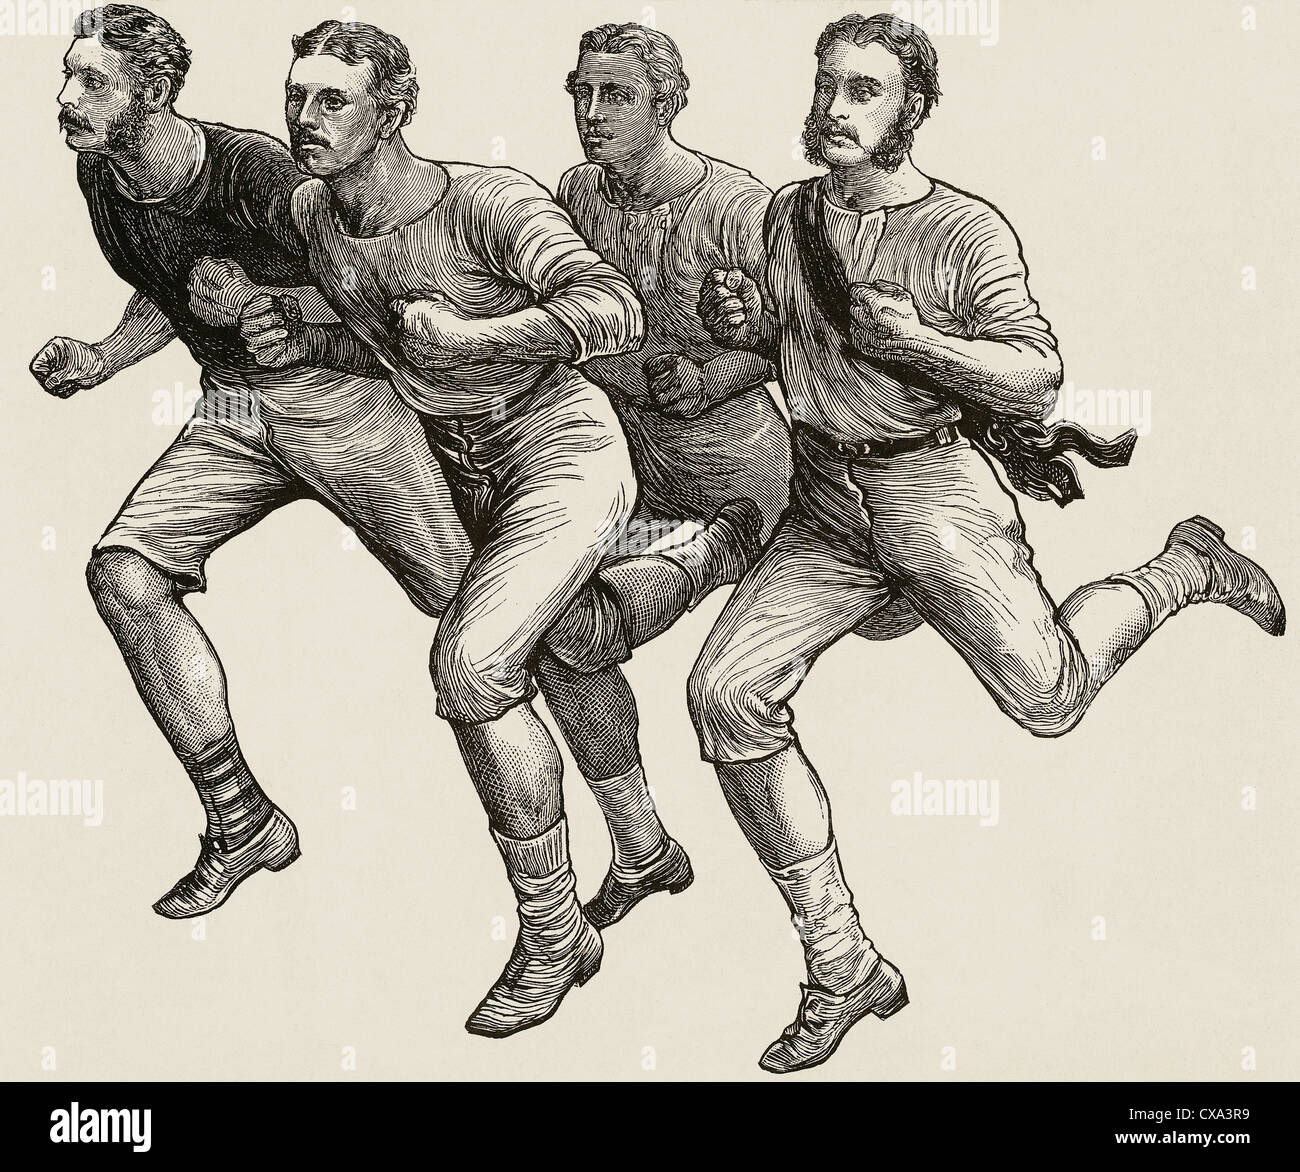 Athletics. Race. Early twentieth century. Engraving. Stock Photo